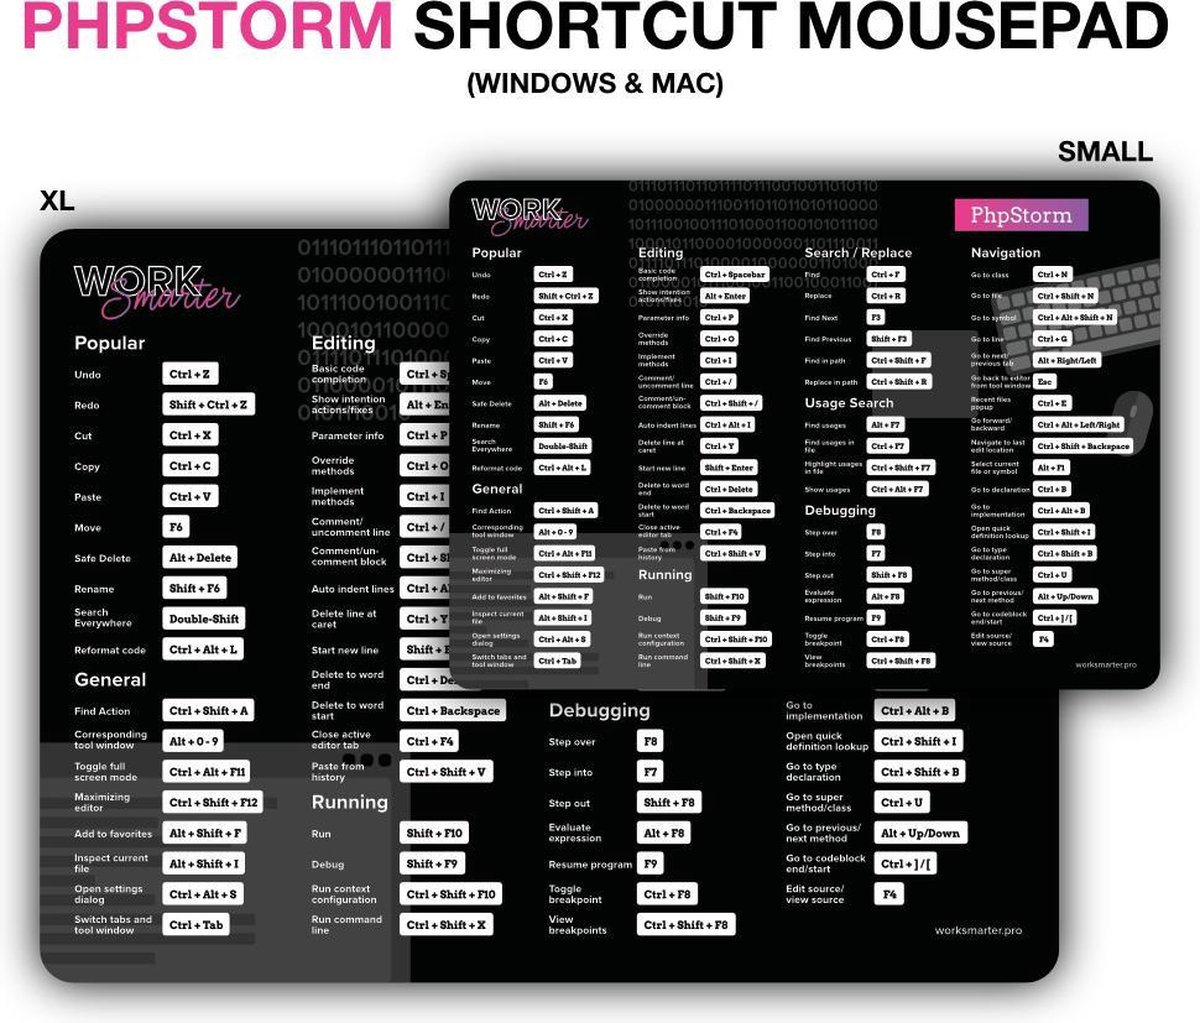 Jetbrains PHPStorm Shortcut Mousepad - Normal - Mac